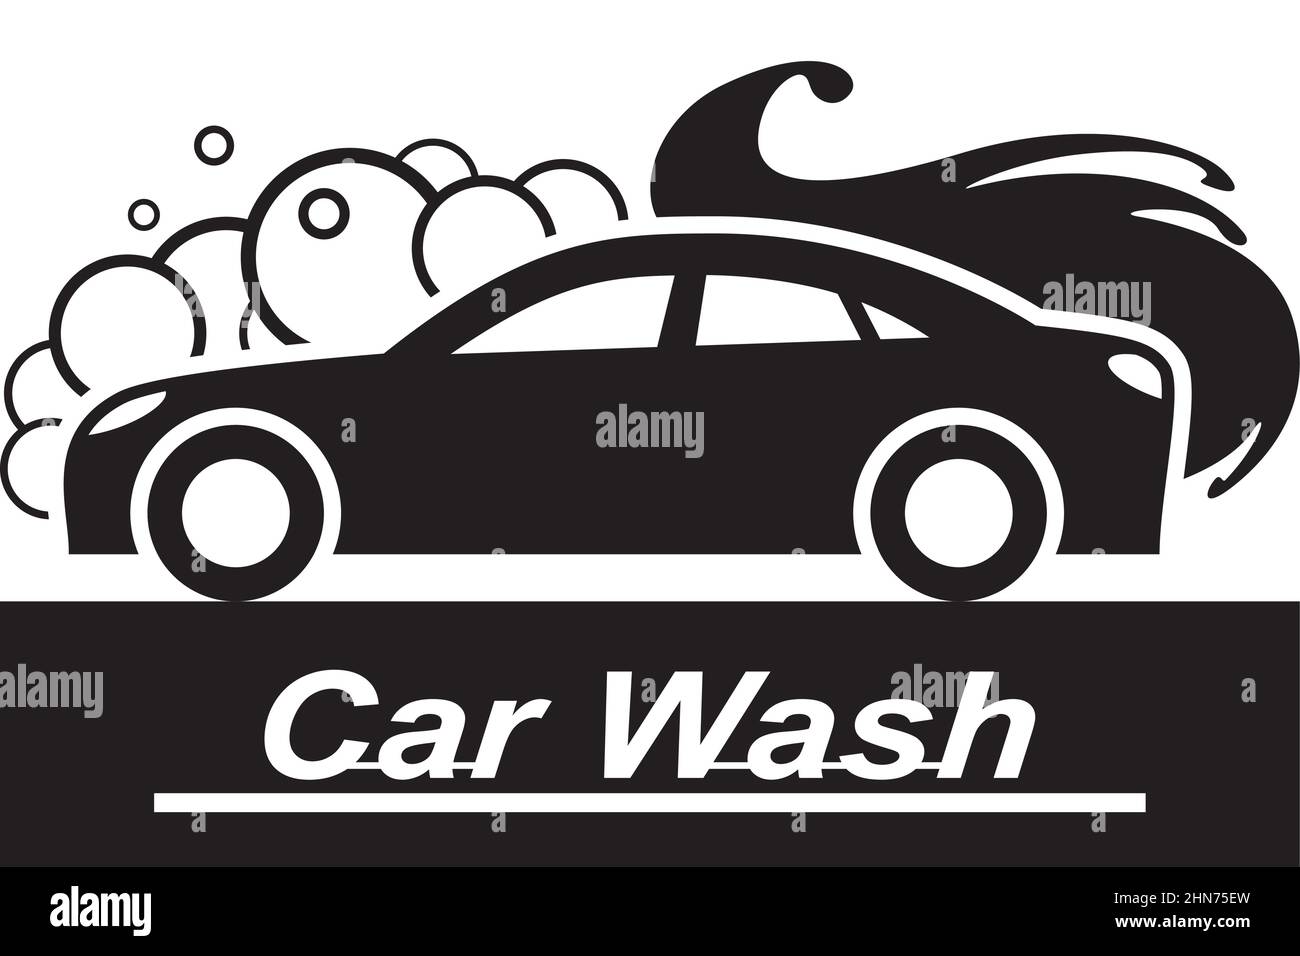 Car wash advertising – vector illustration Stock Vector